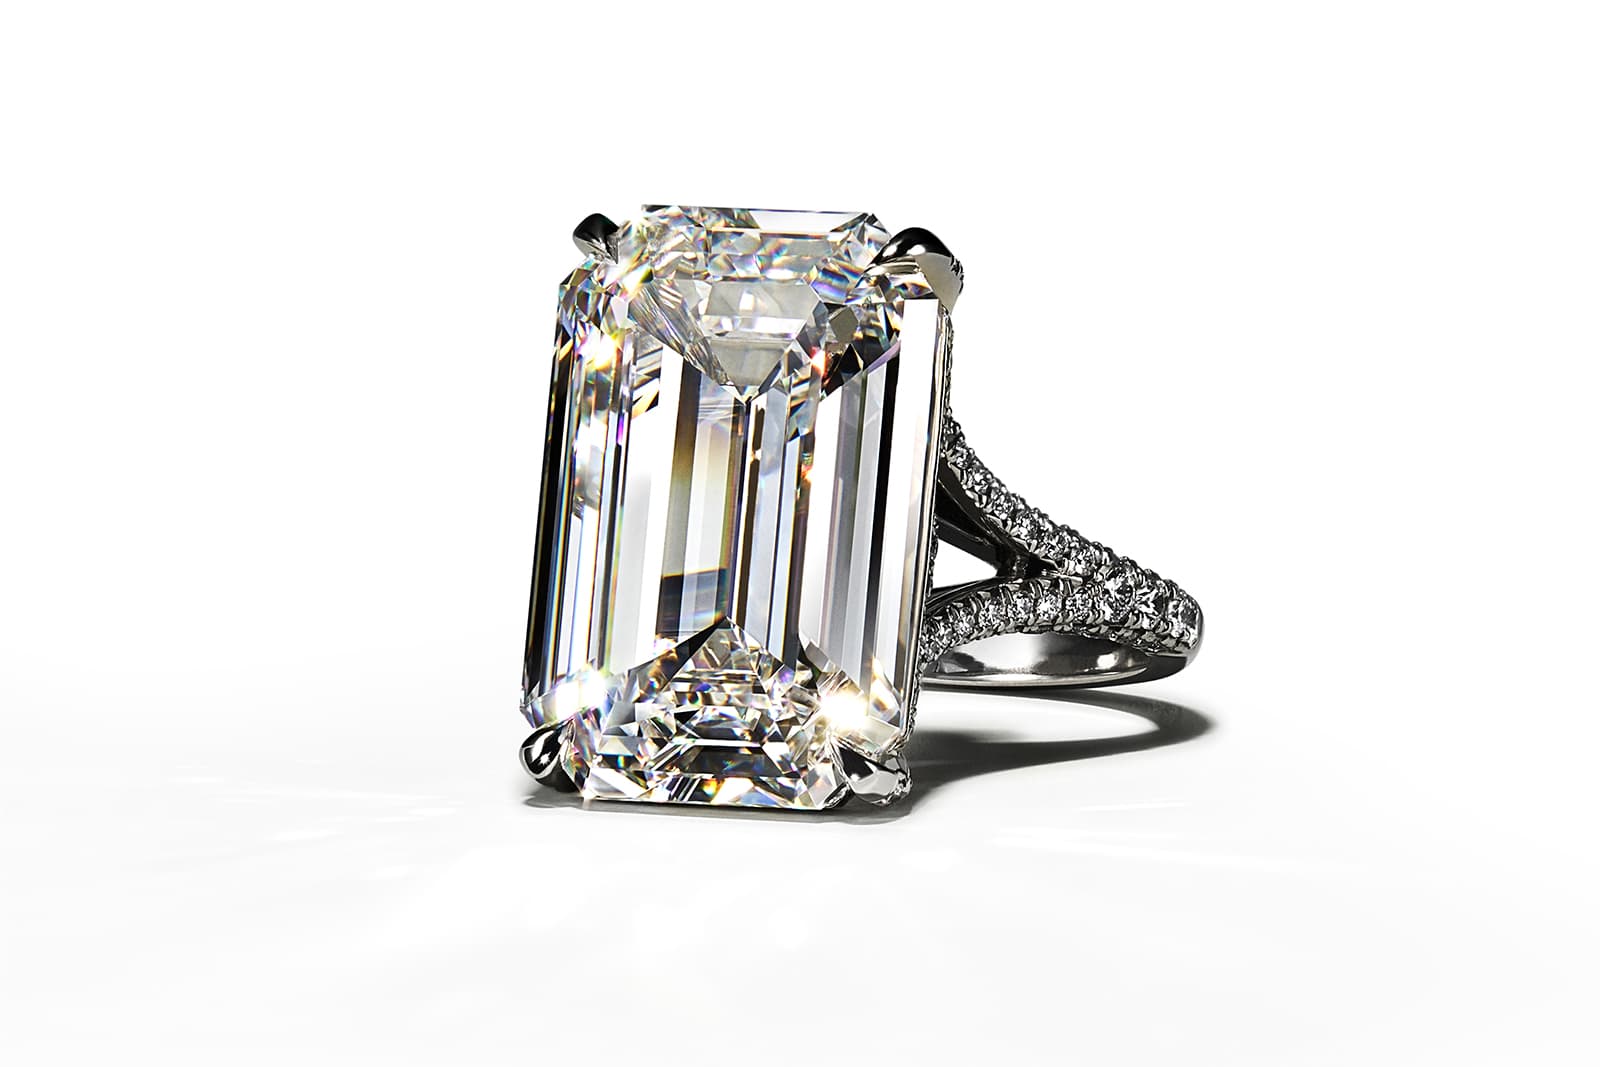 Tiffany & Co. emerald-cut diamond engagement ring with diamond-set shoulders